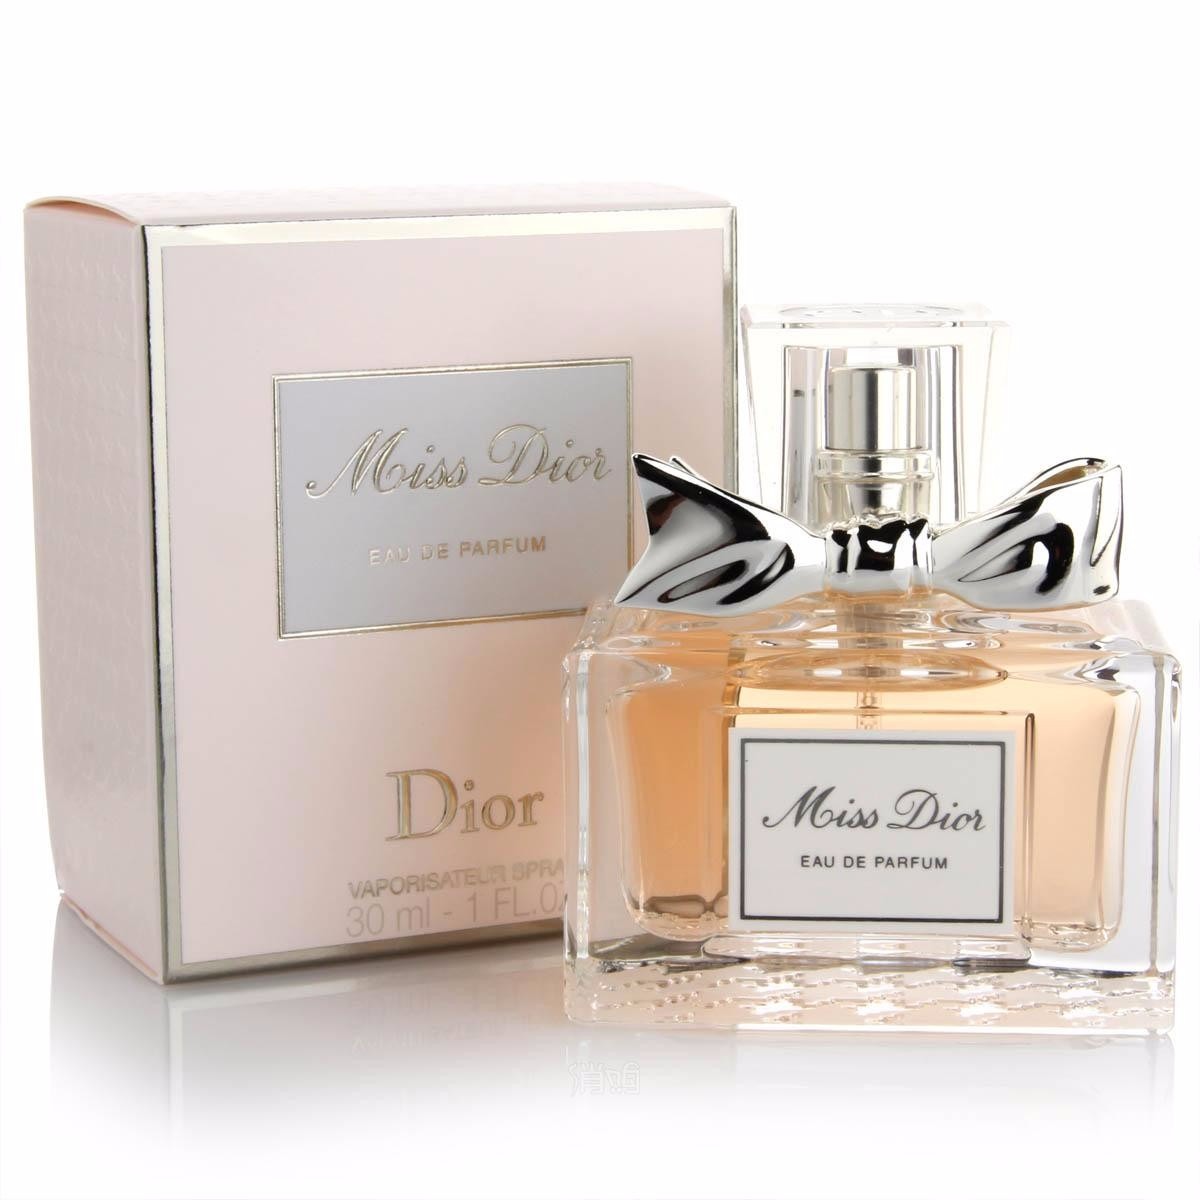 Perfume Miss Dior Eau De Parfum 30ml Lacrado 100% Original - R$ 194,49